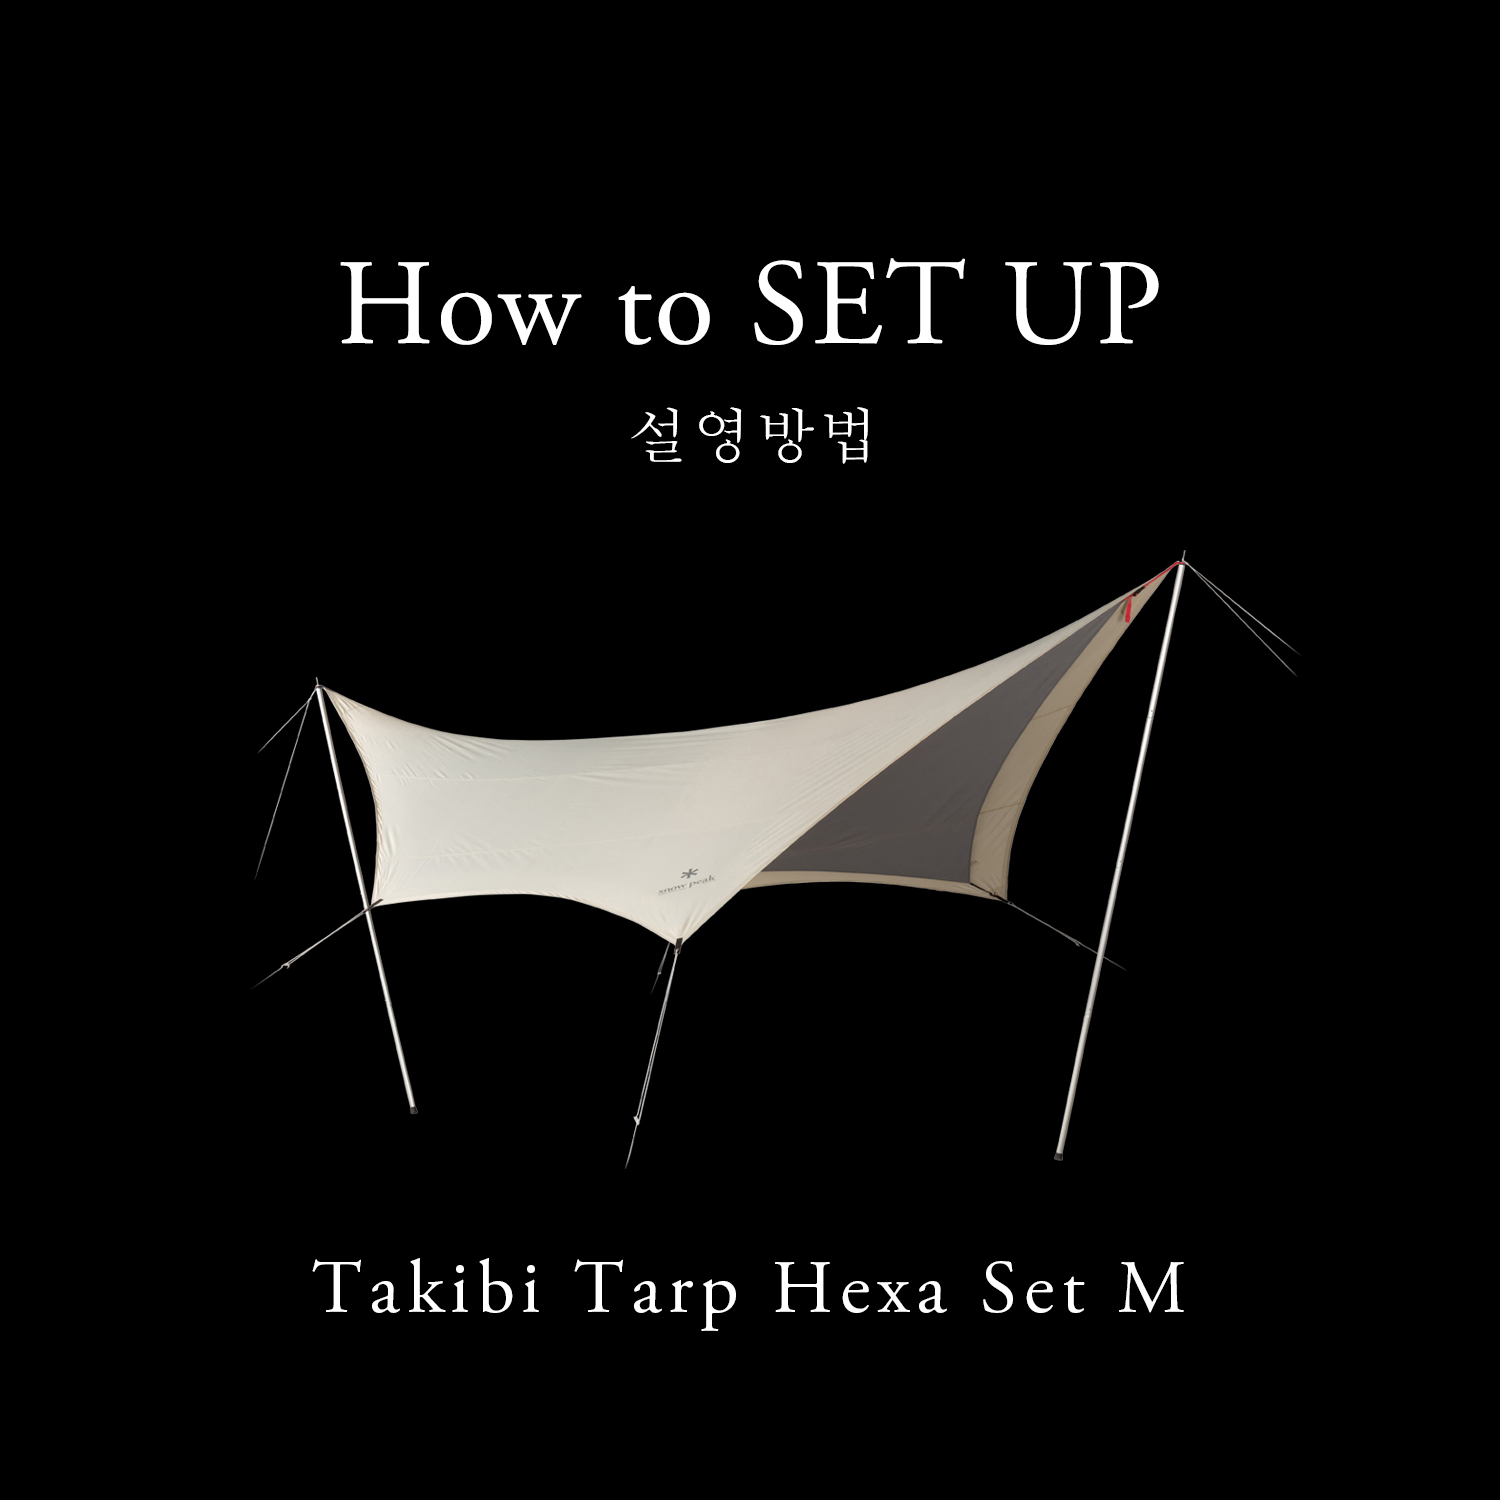 How to SET UP | TAKIBI 타프헥사M세트